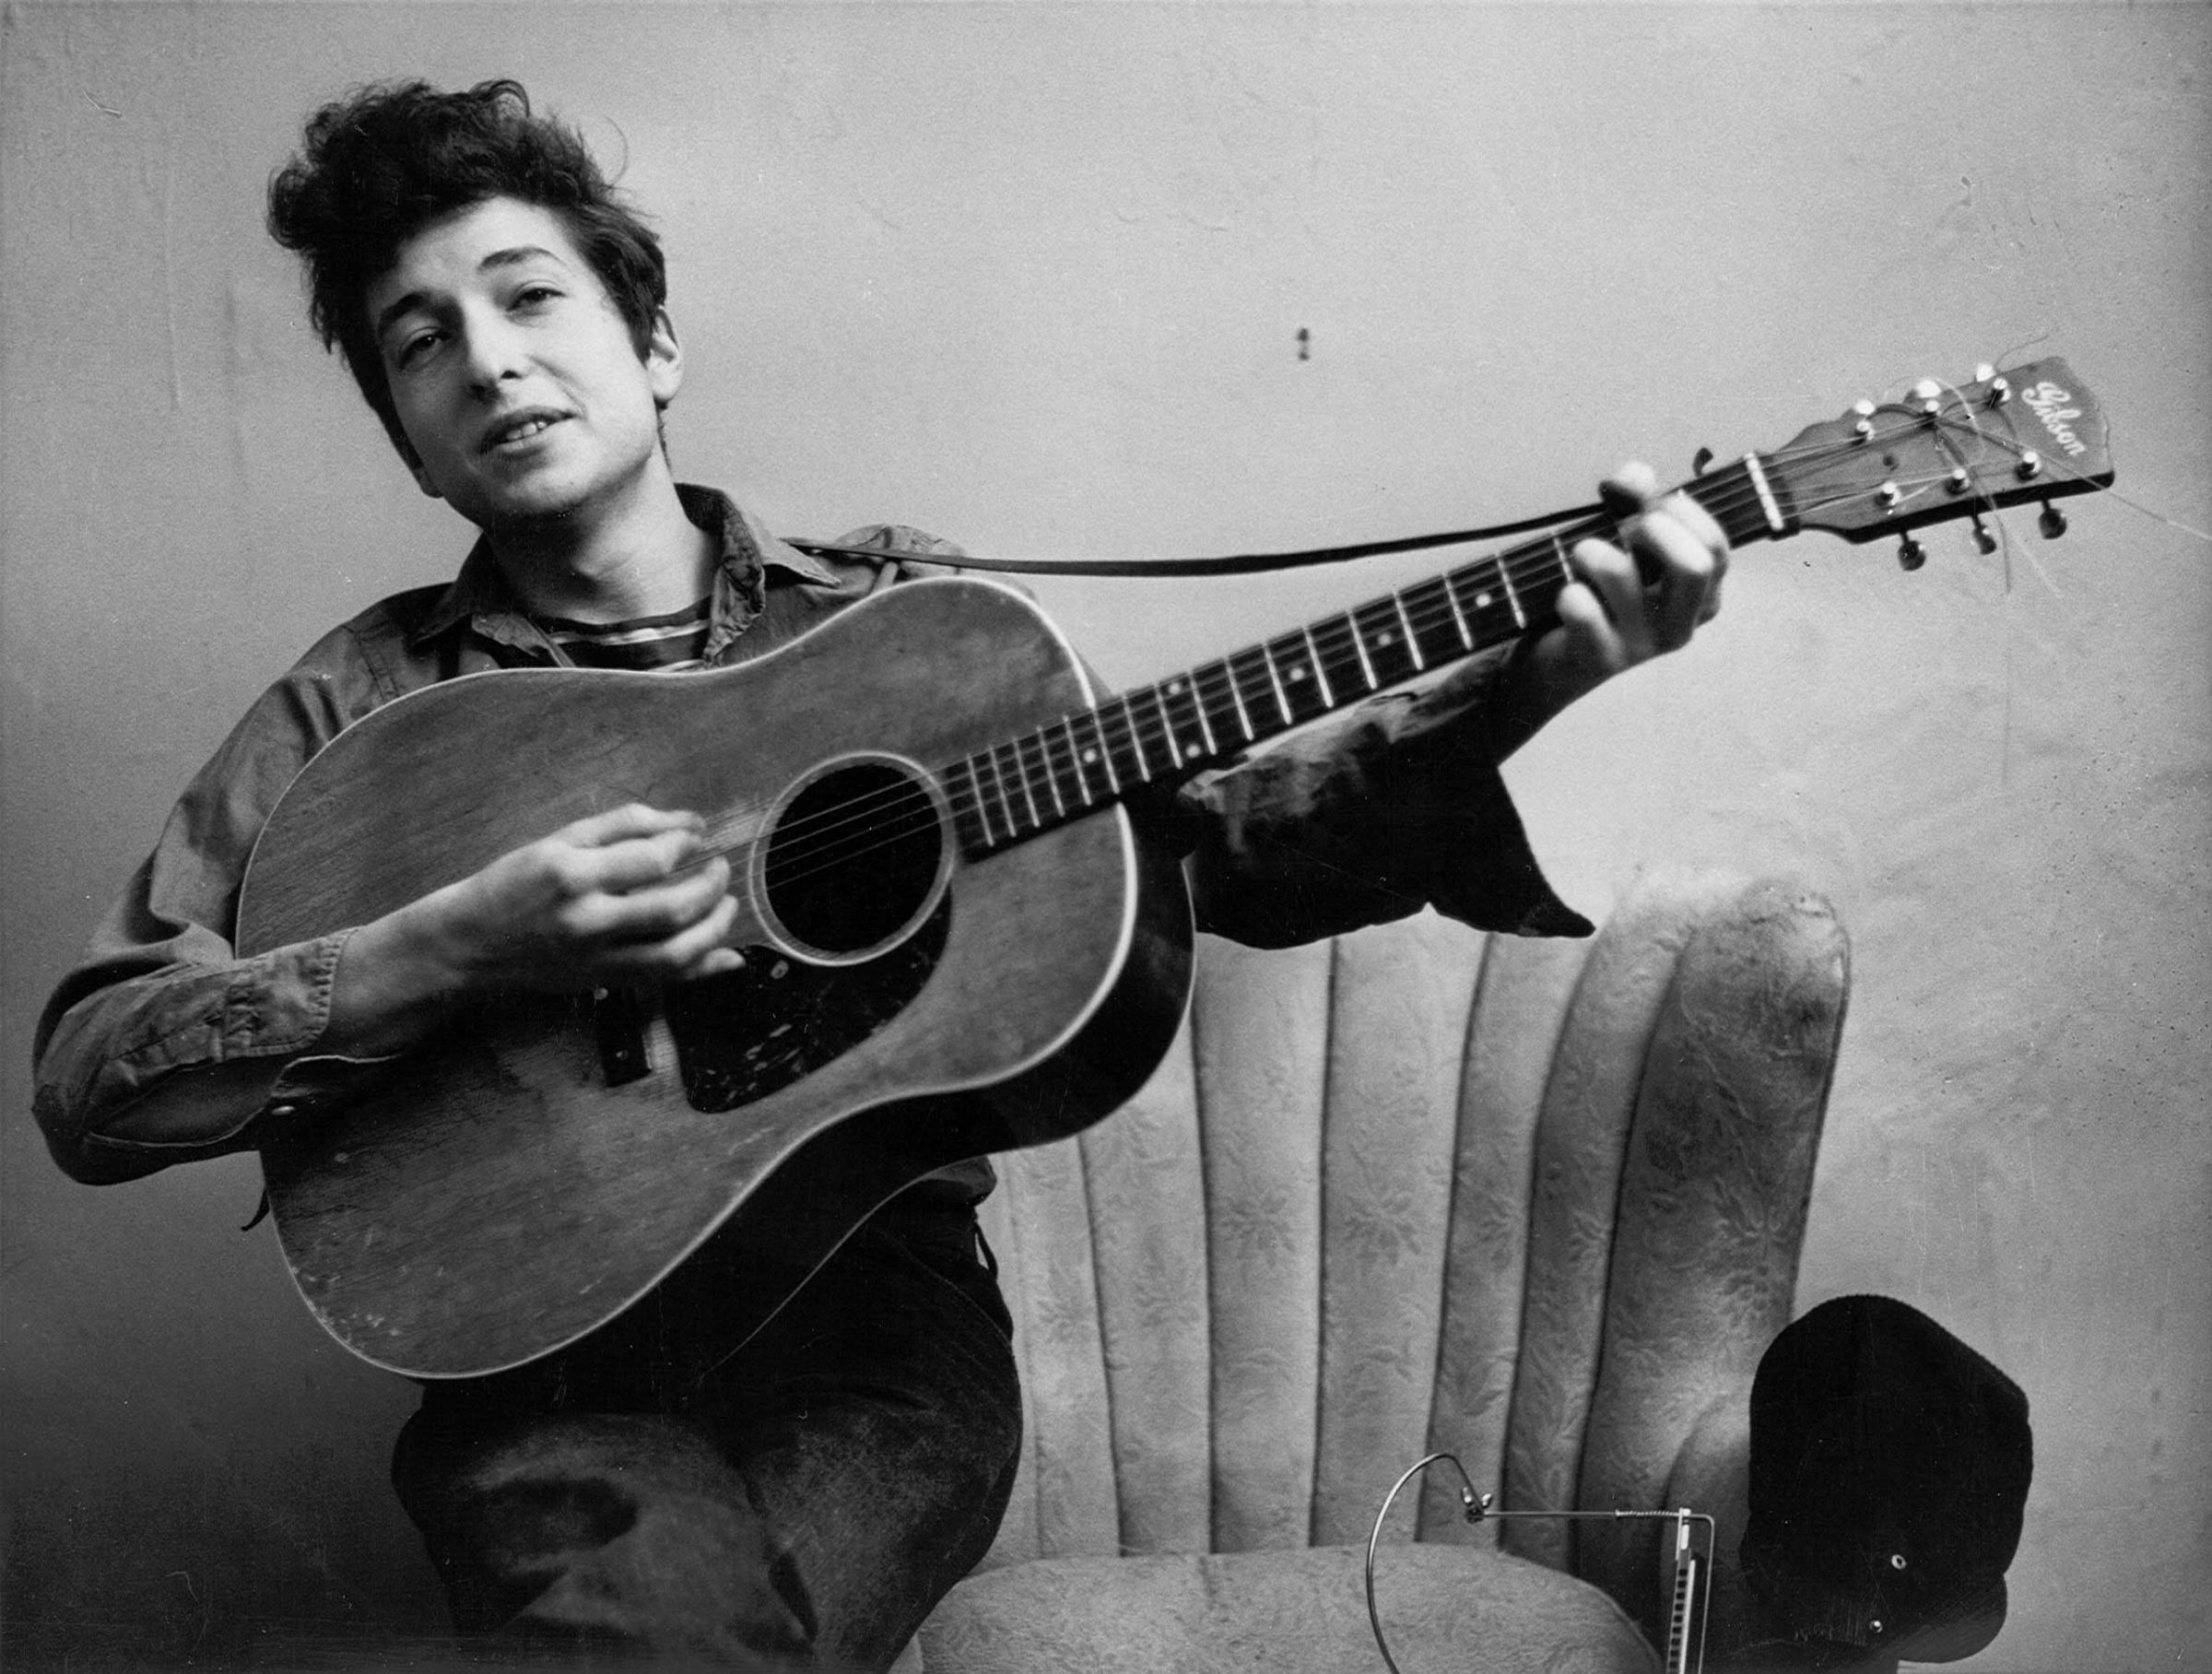 Bob Dylan Portrait With Acoustic Guitar